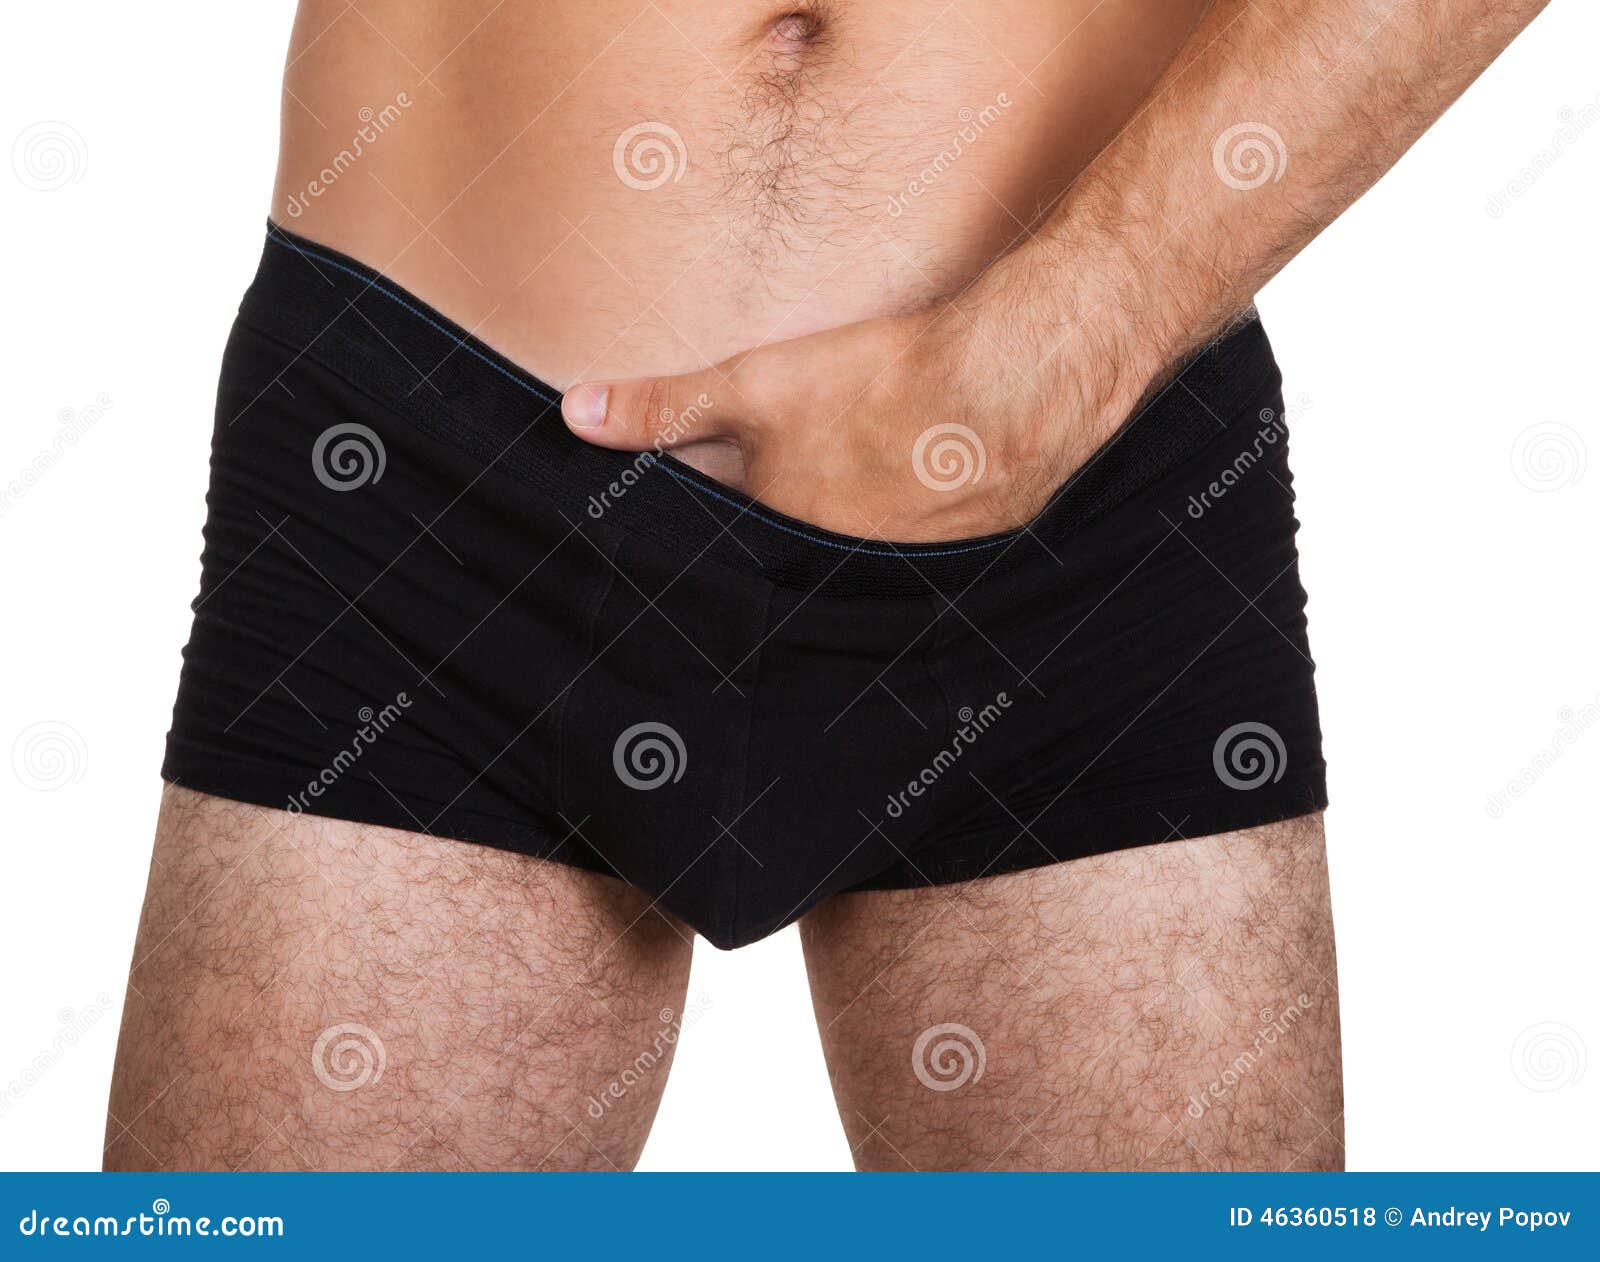 https://thumbs.dreamstime.com/z/man-putting-hand-underwear-close-up-his-inside-46360518.jpg